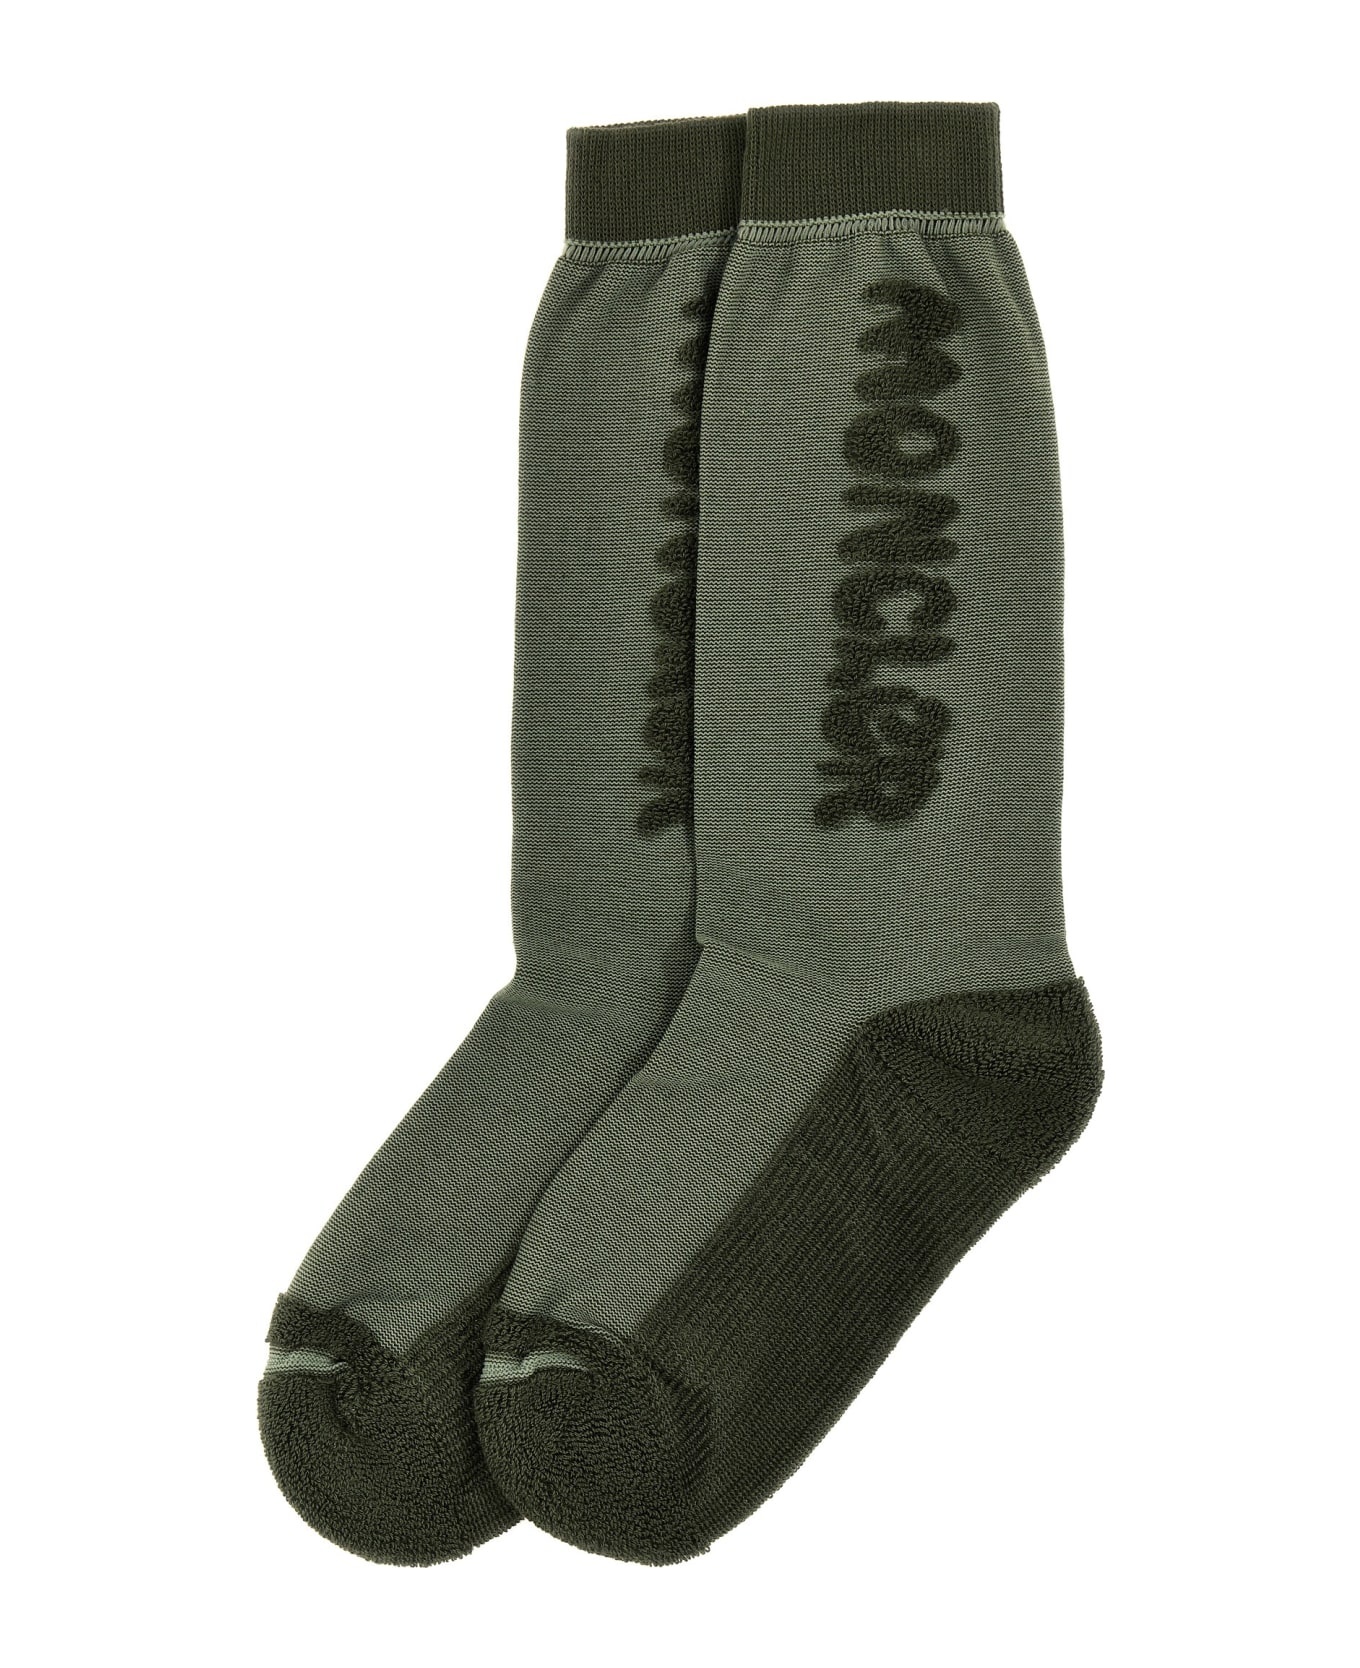 Moncler Genius X Salehe Bembury Socks - 2